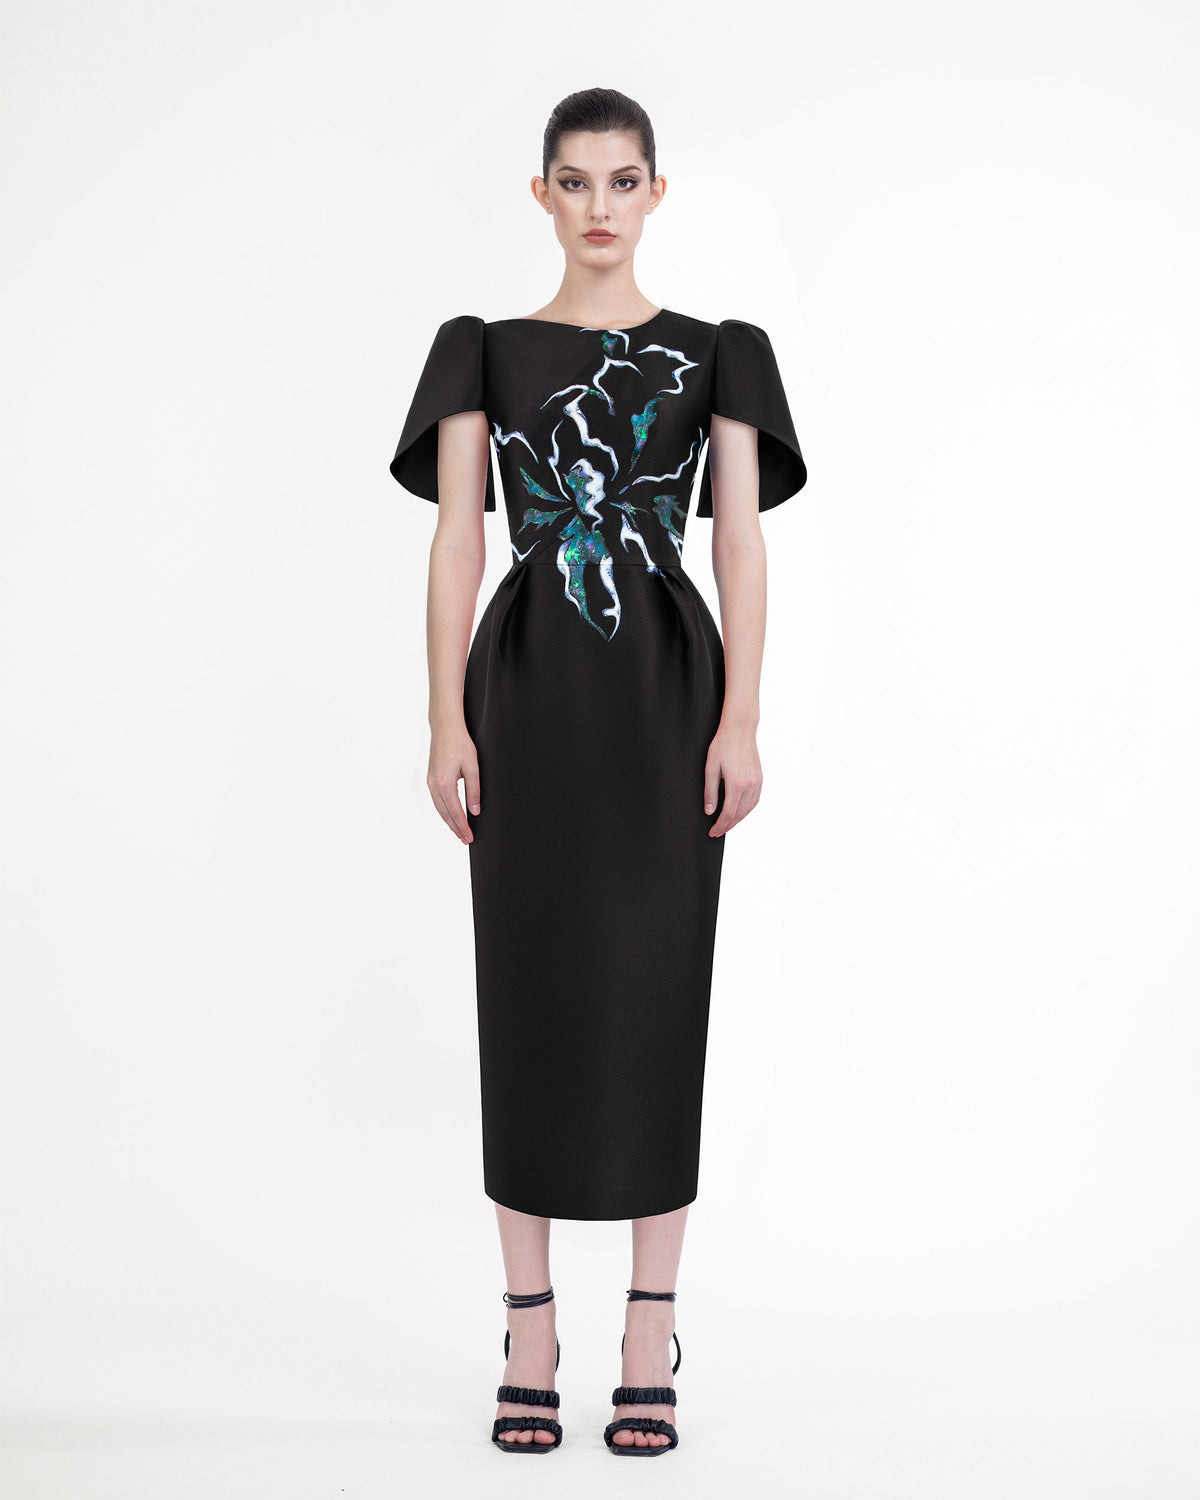 Rebirth and Bloom - Cape Sleeve Black Midi Dress